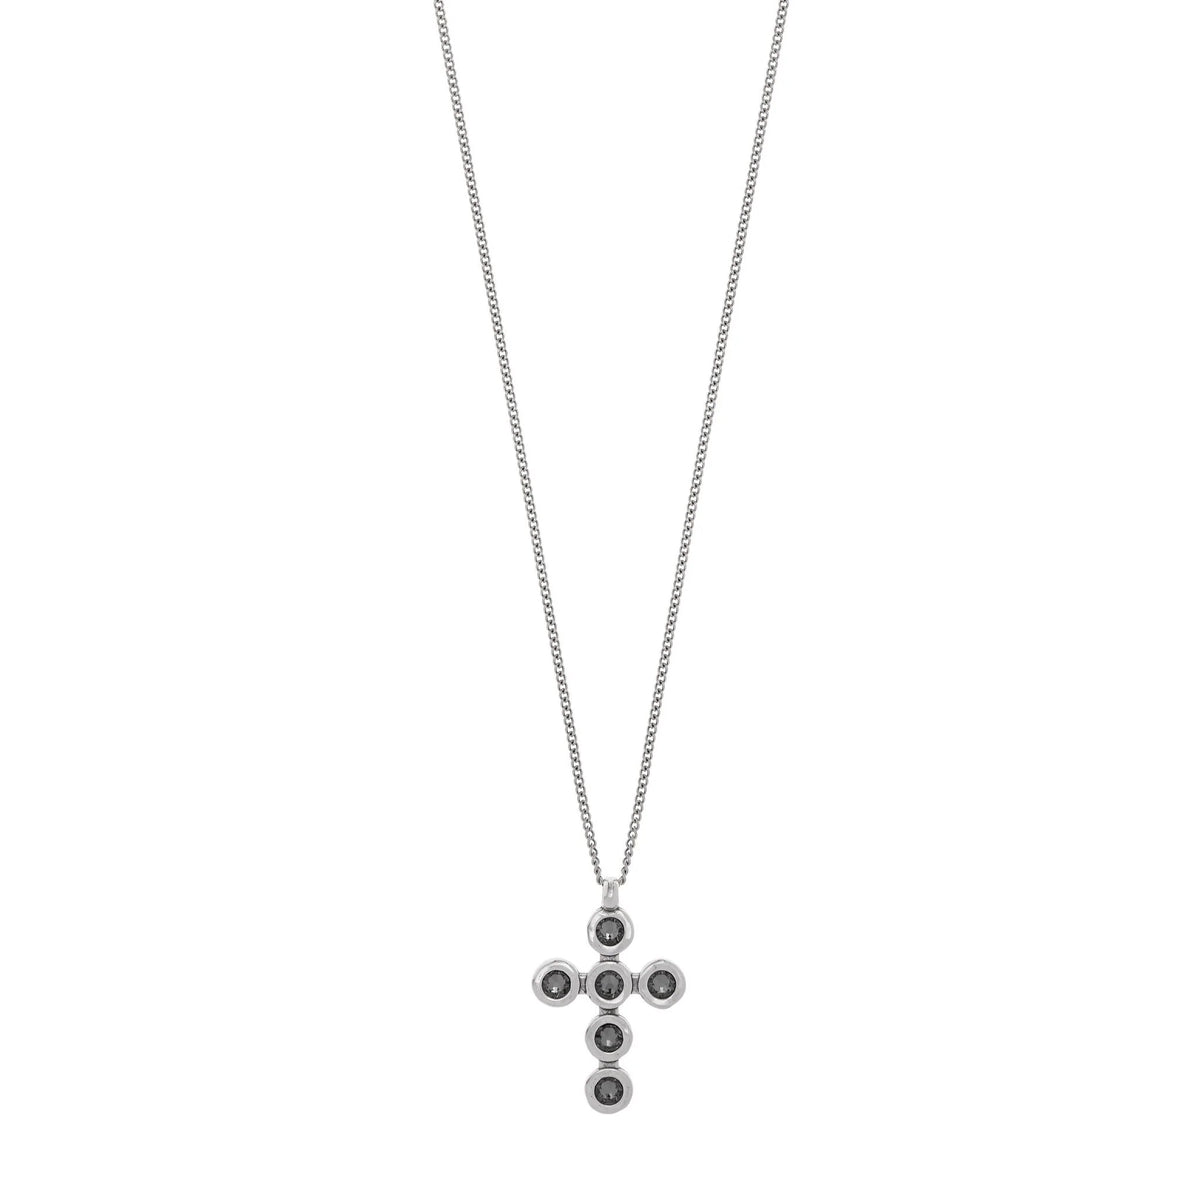 Gemma Swarovski Cross Necklace